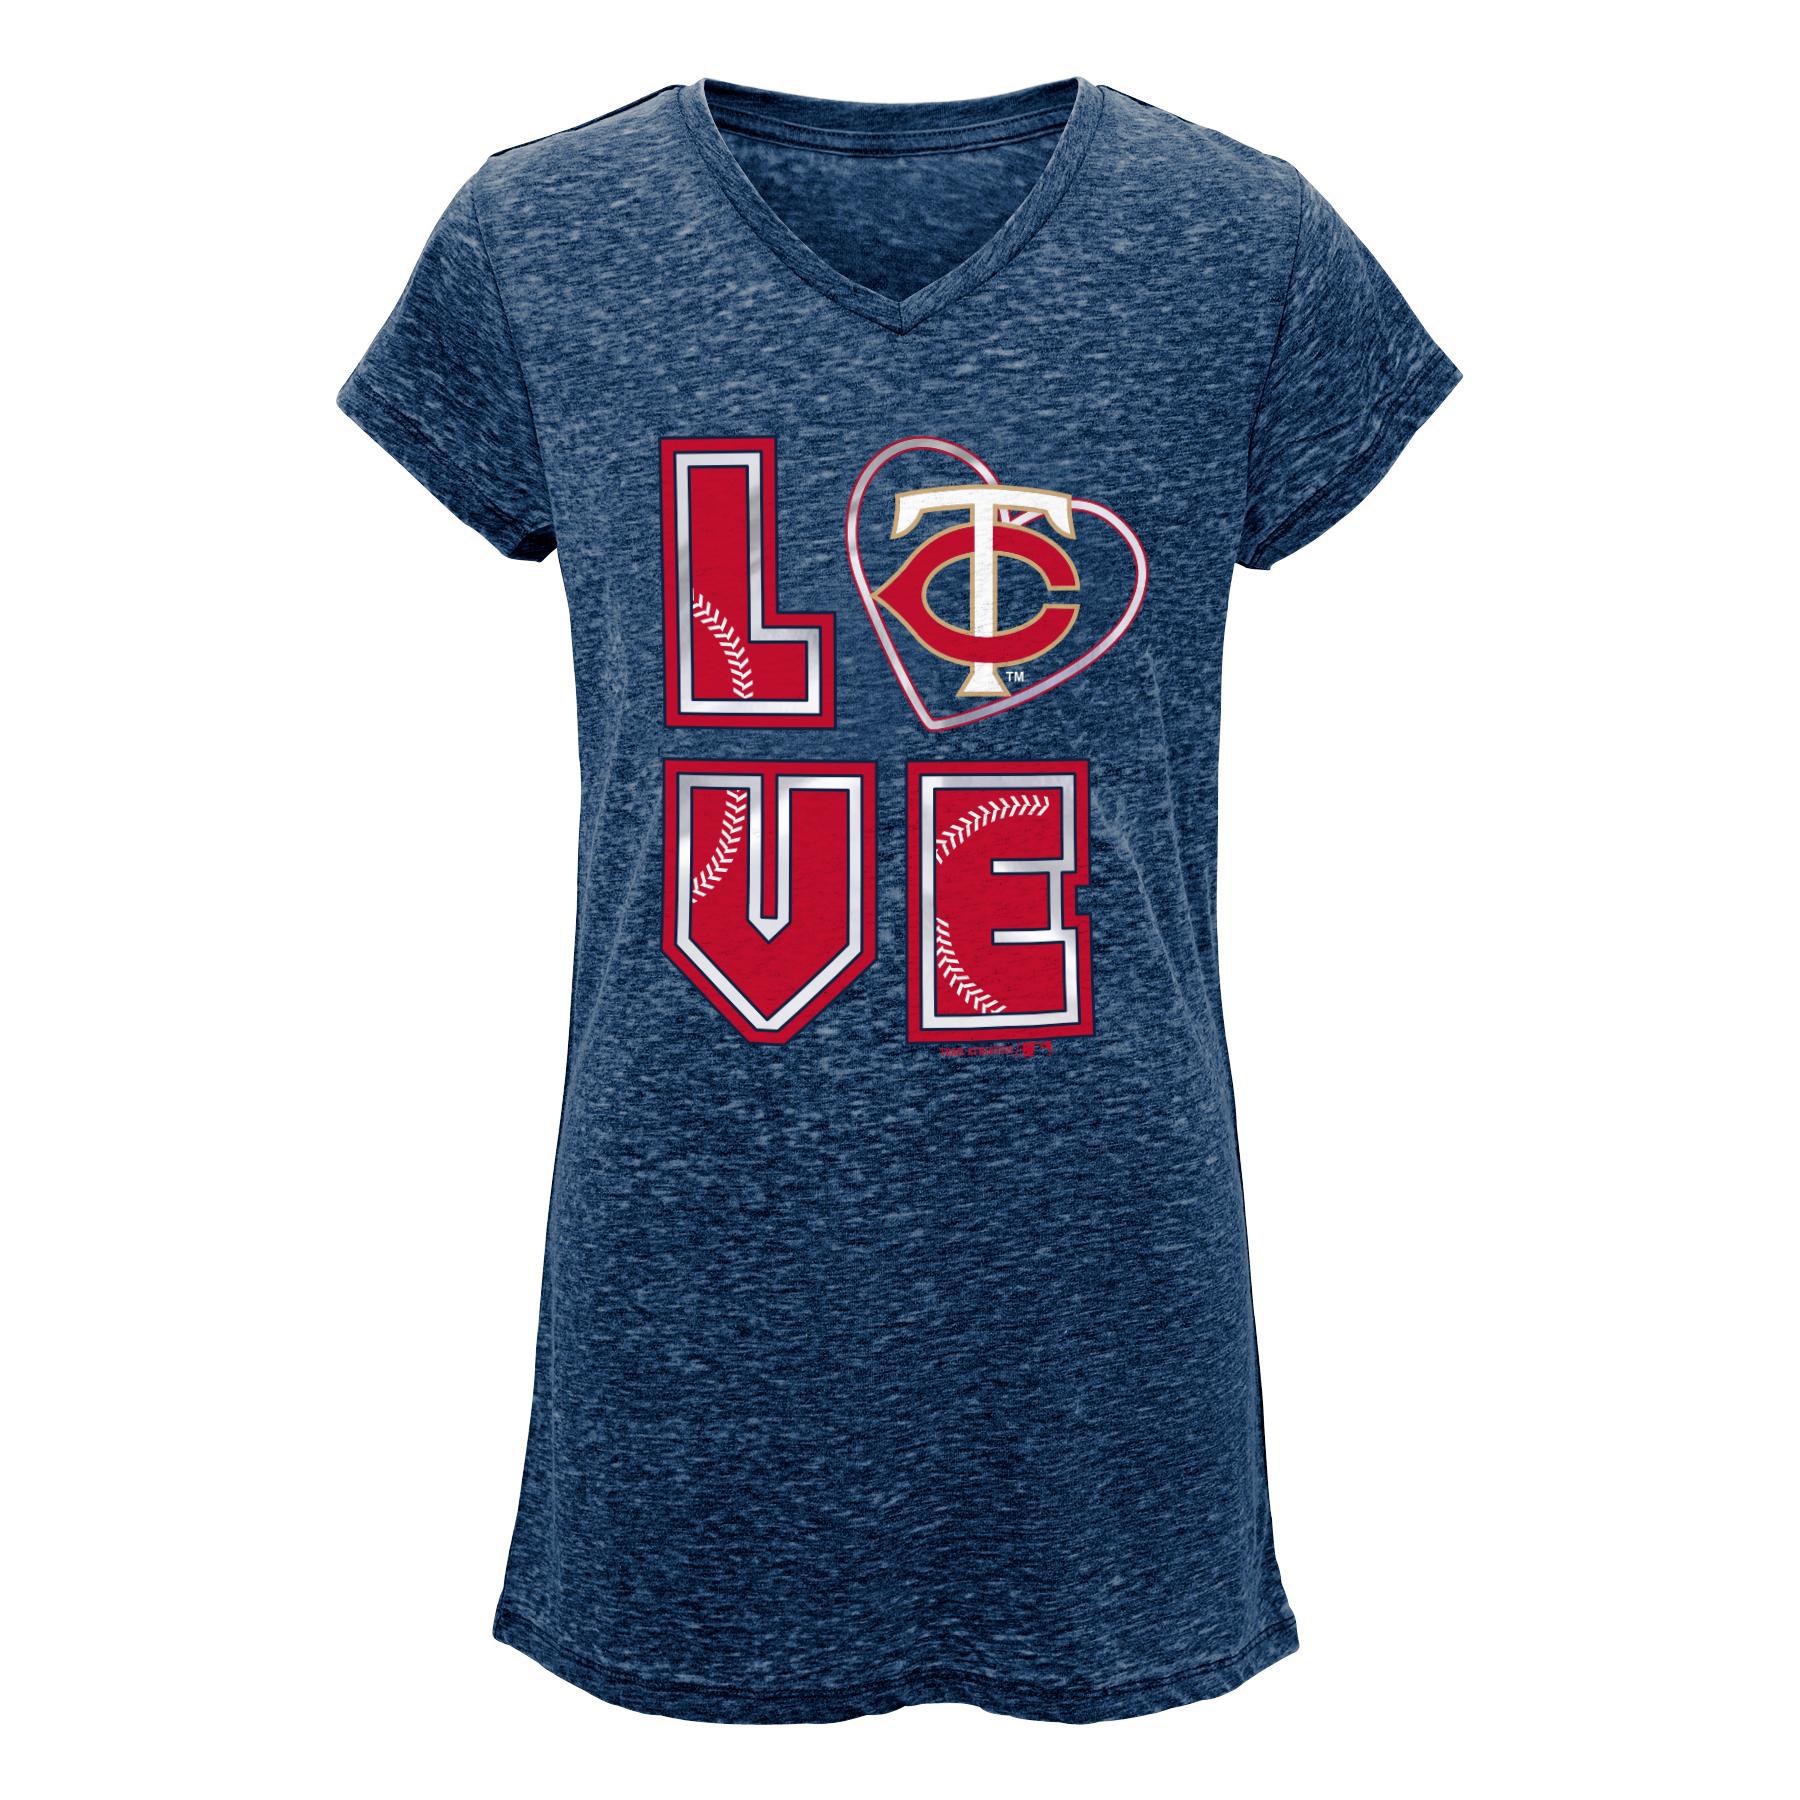 MLB Girls' Burnout T-Shirt - Minnesota Twins